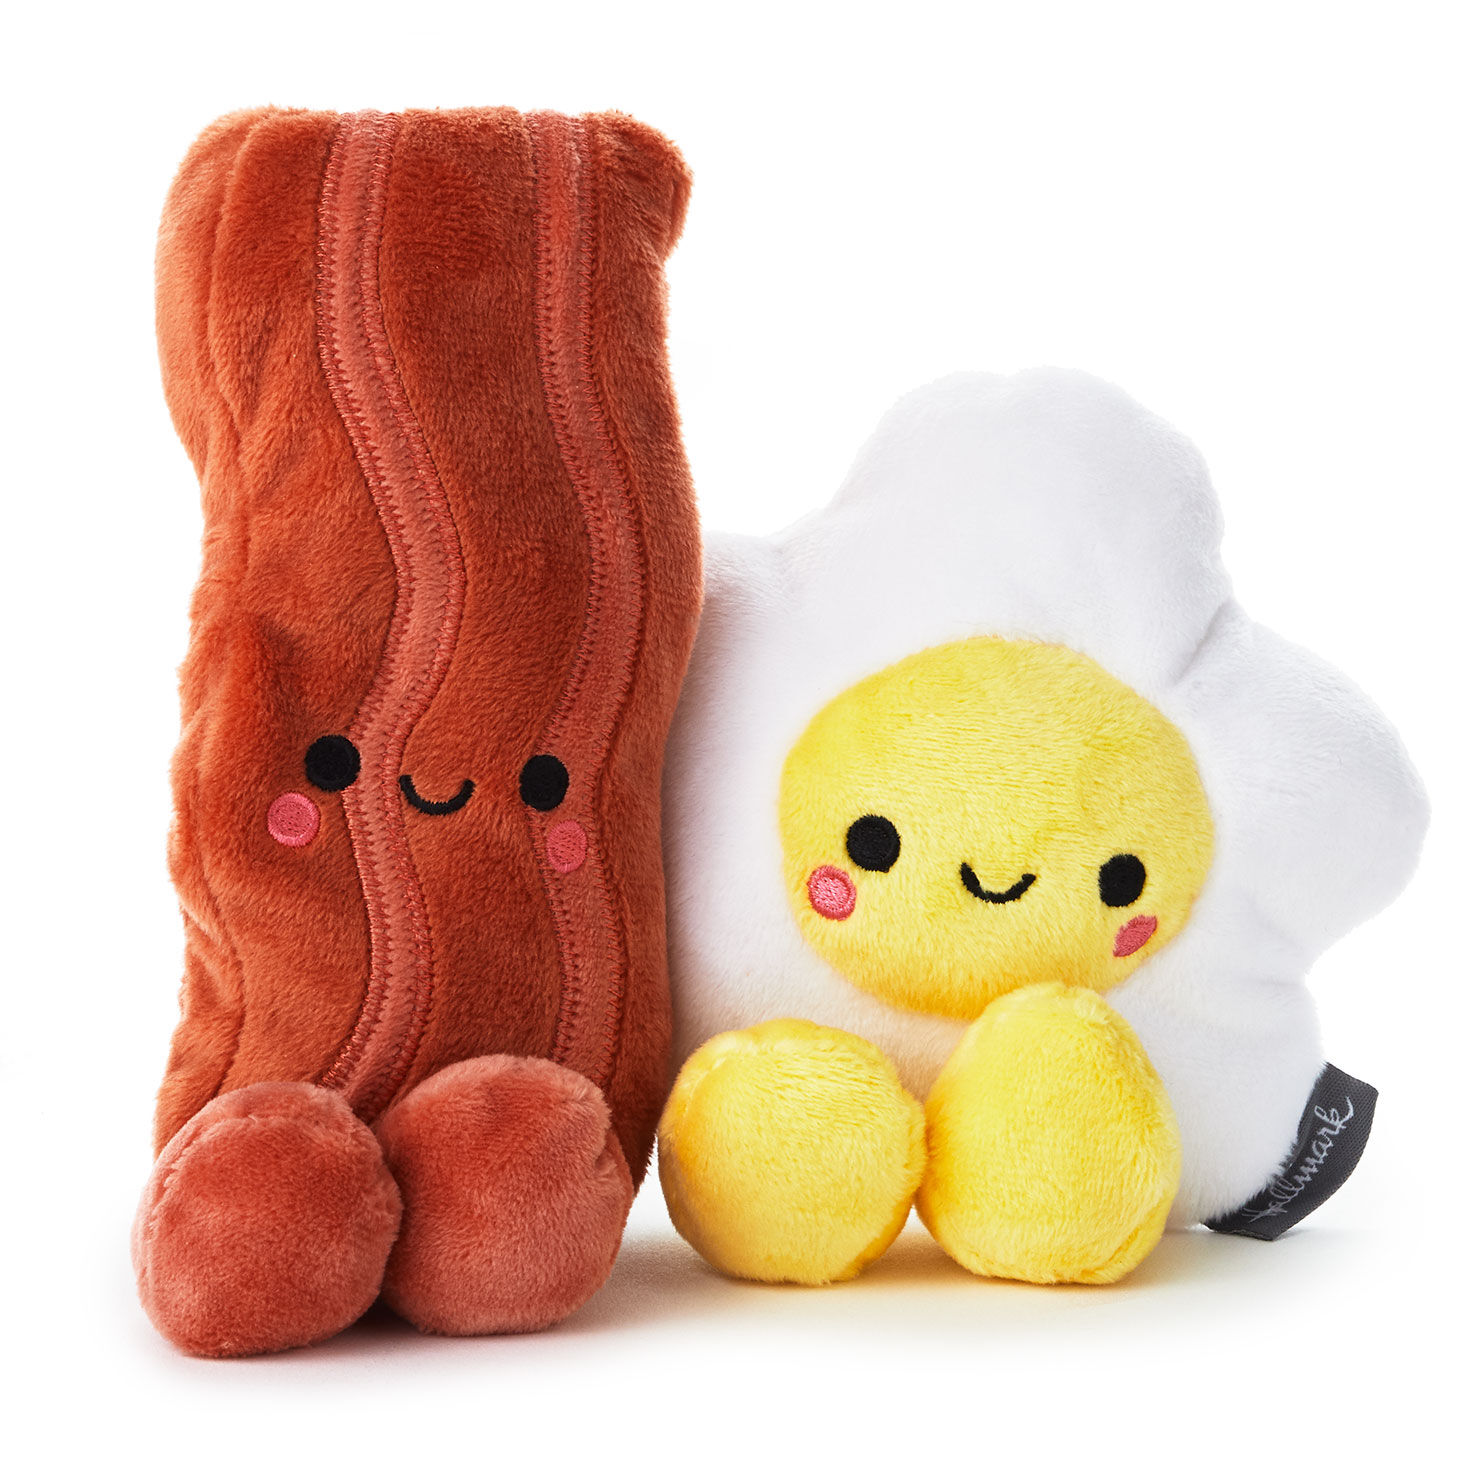 Bacon and Egg Love Plush Ornament